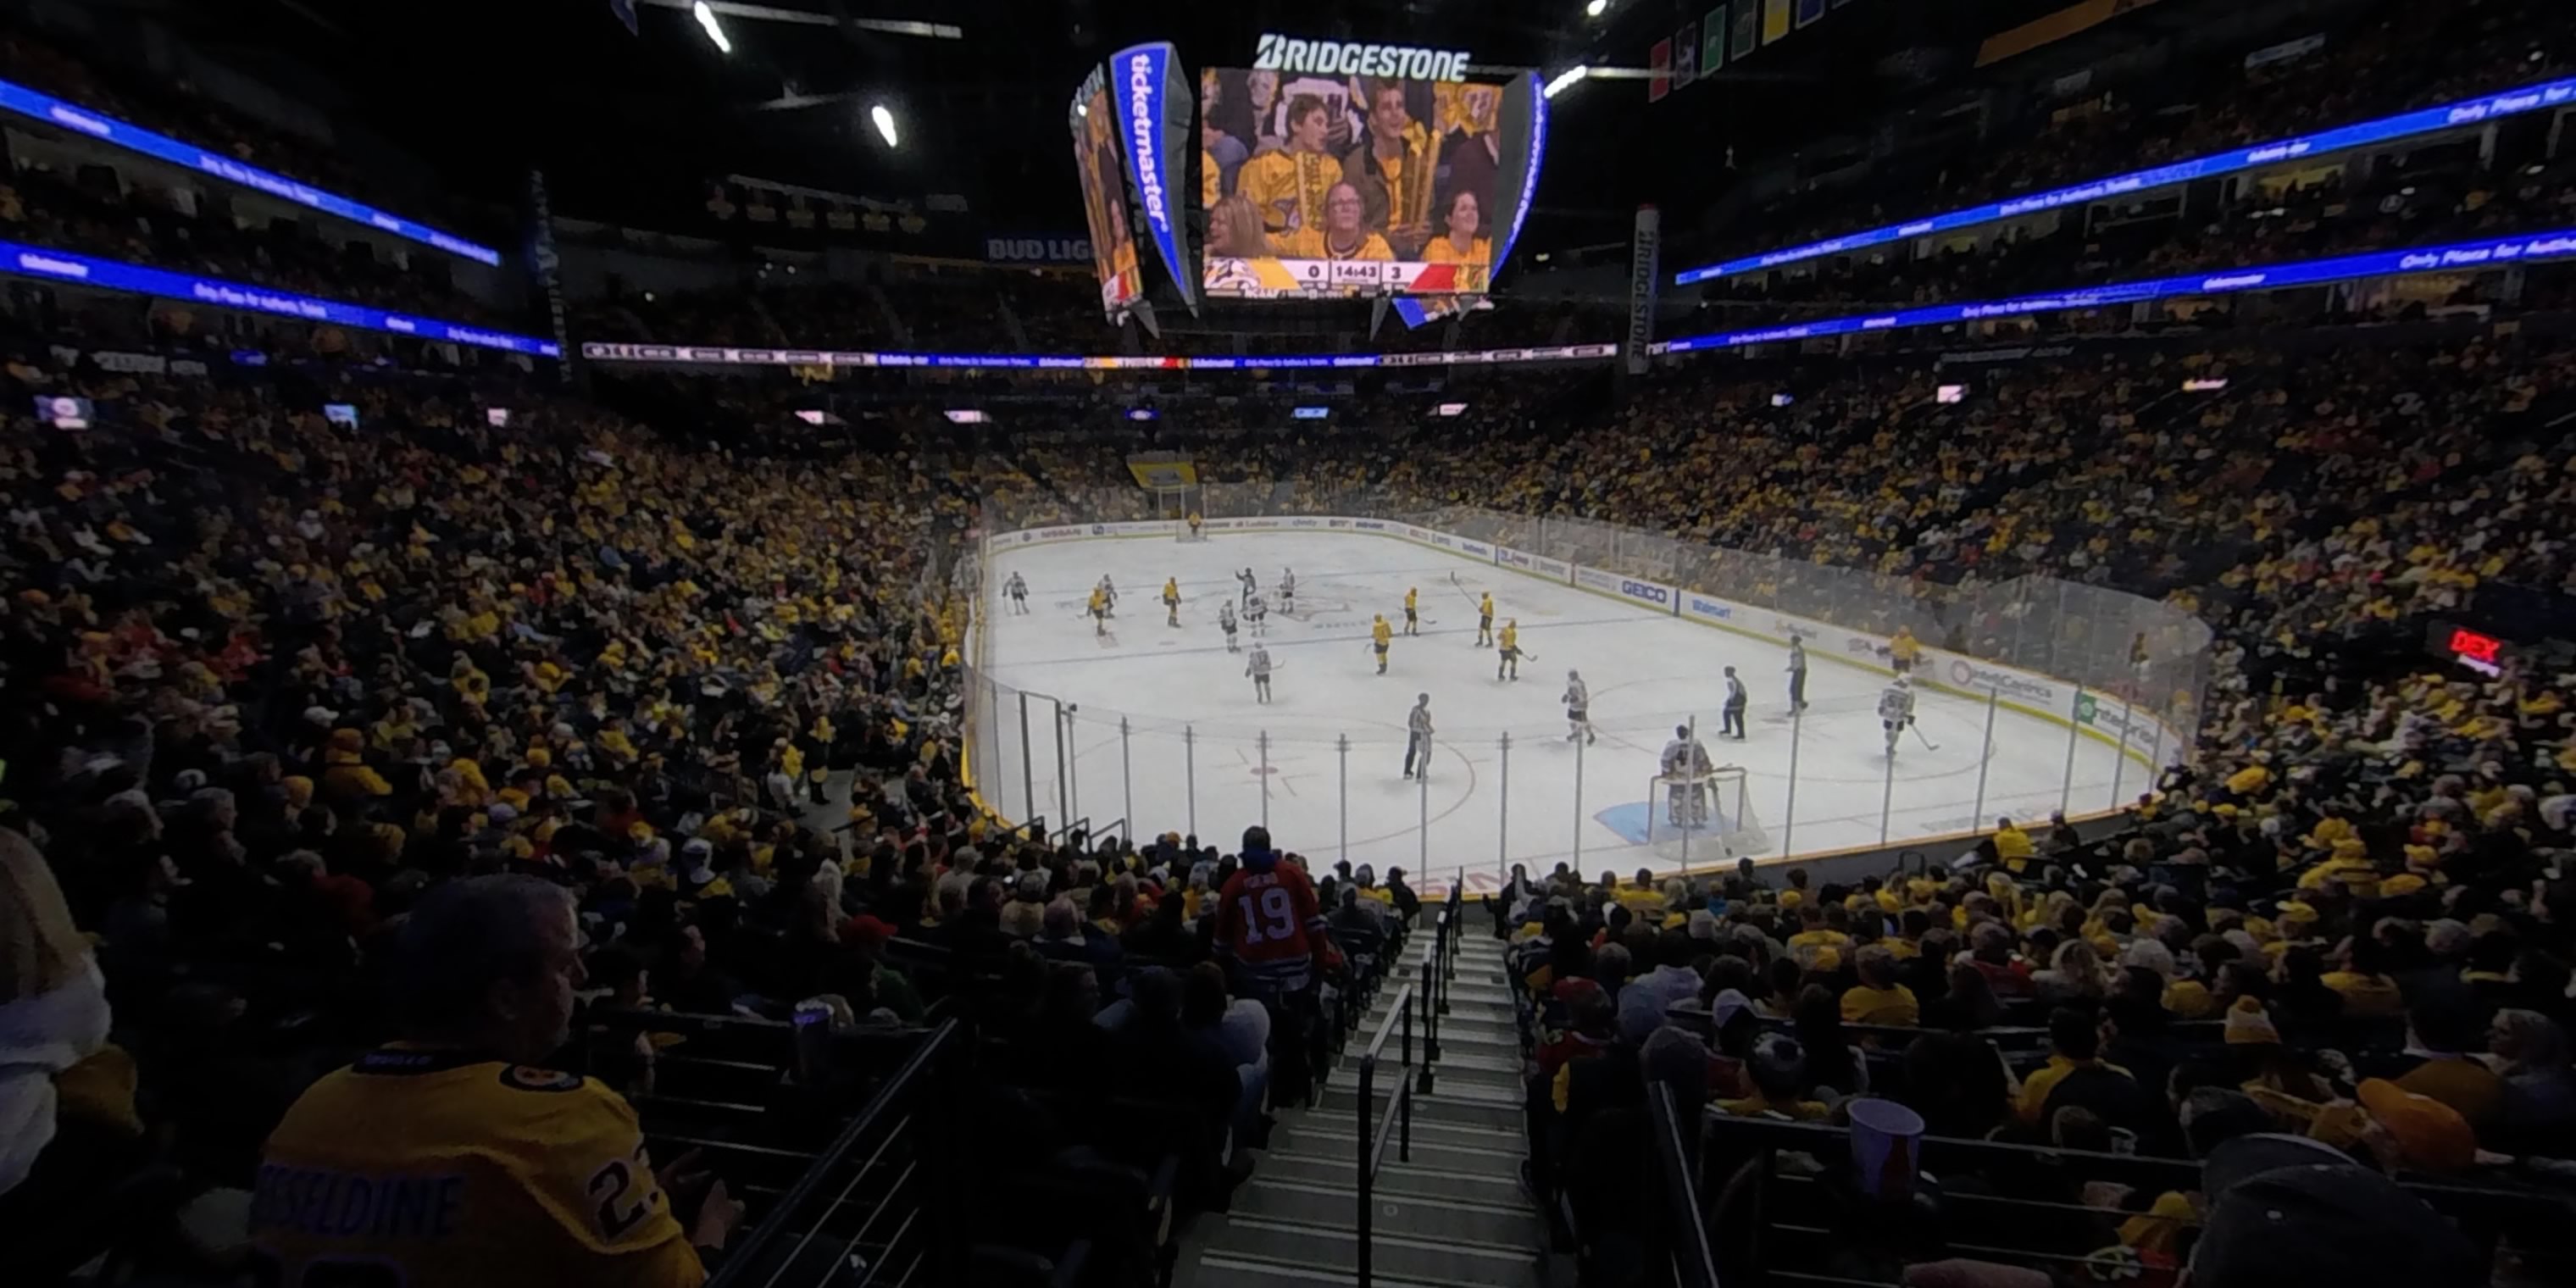 section 119 panoramic seat view  for hockey - bridgestone arena